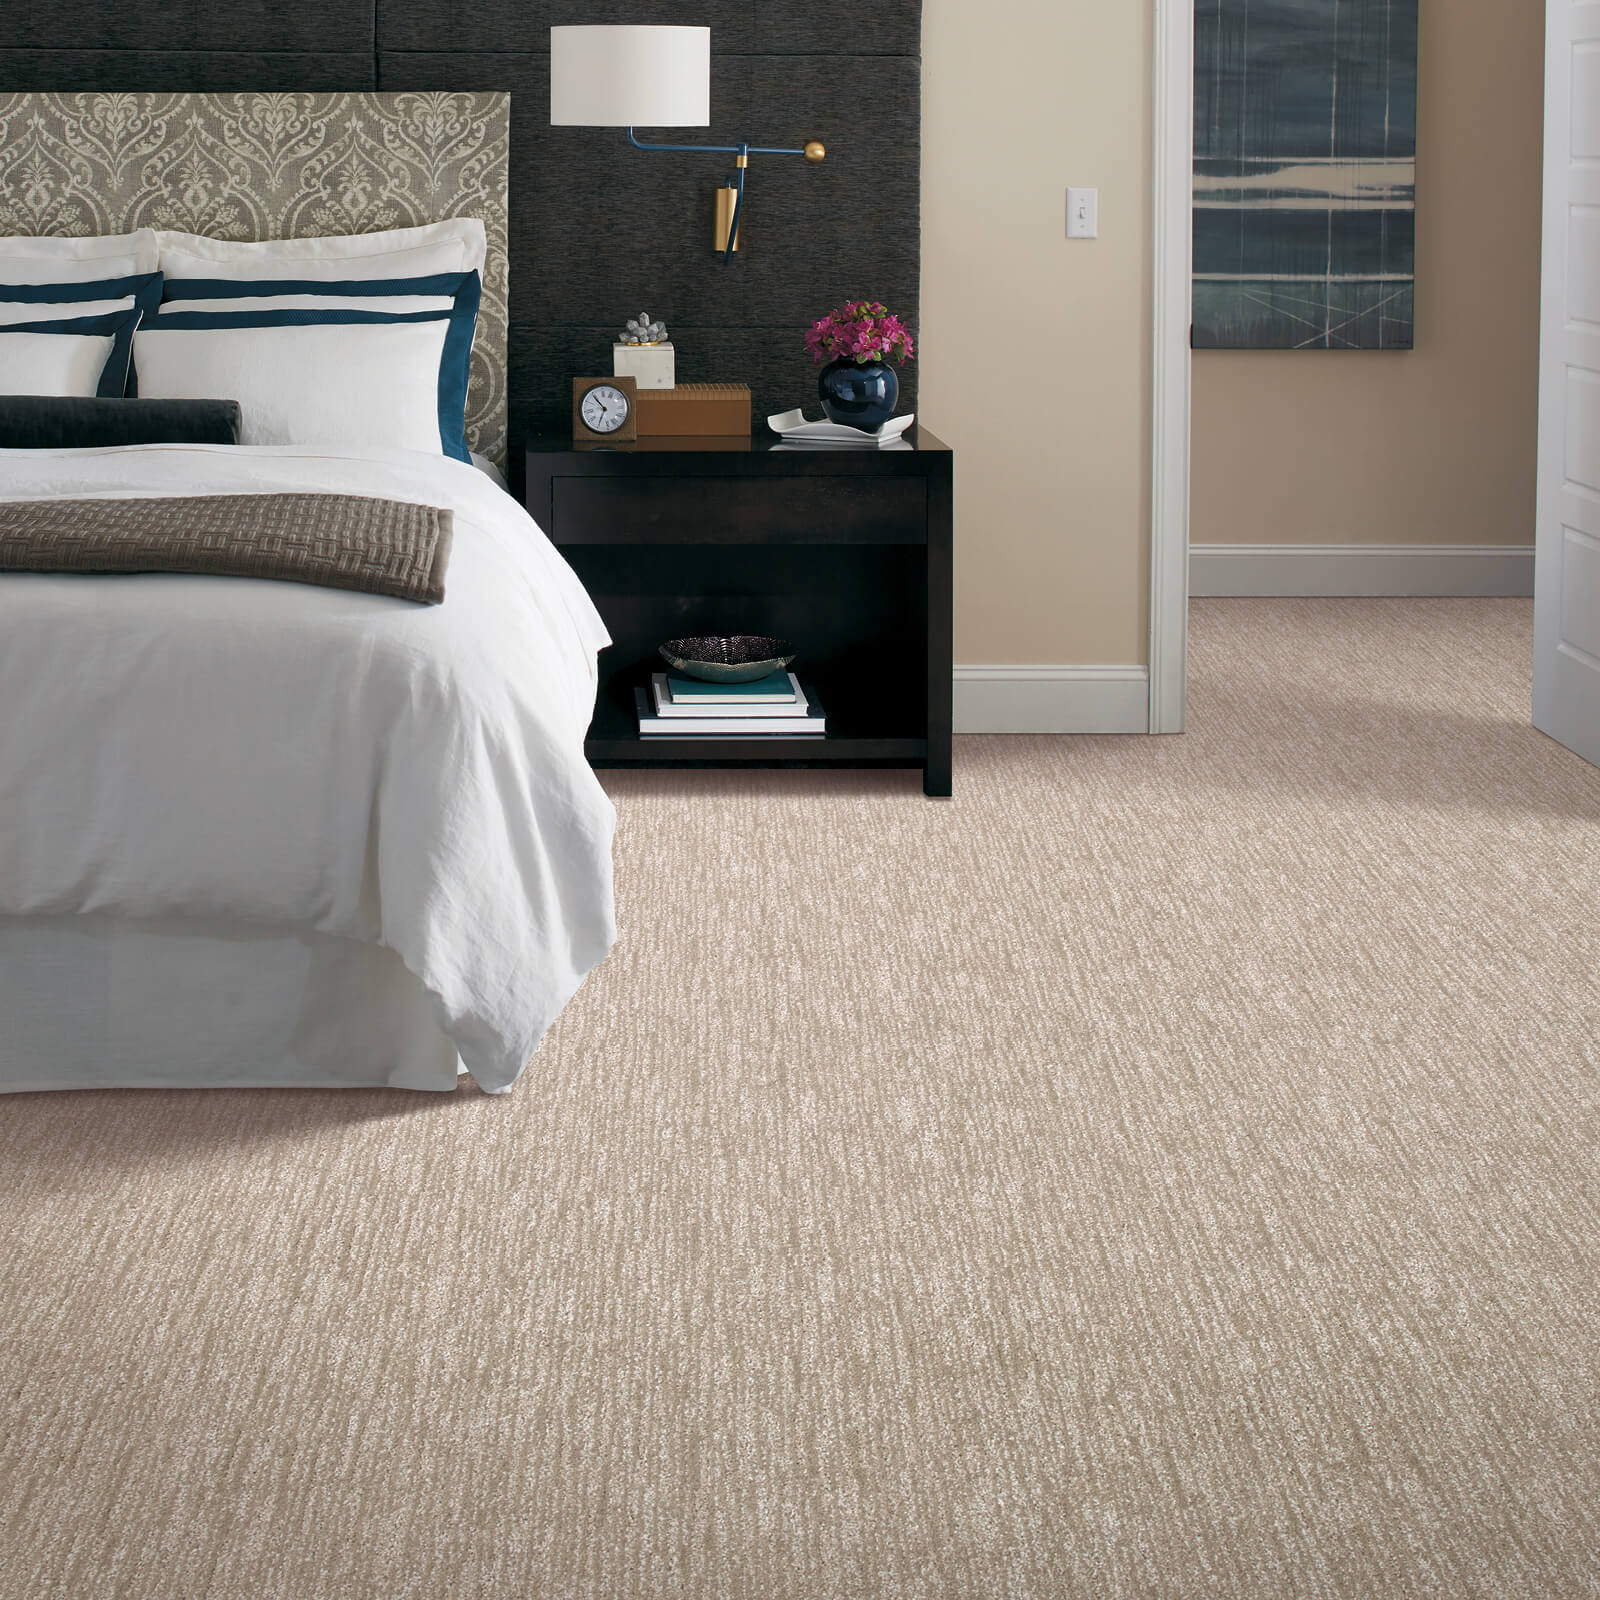 New carpet in bedroom | Rockford Floor Covering